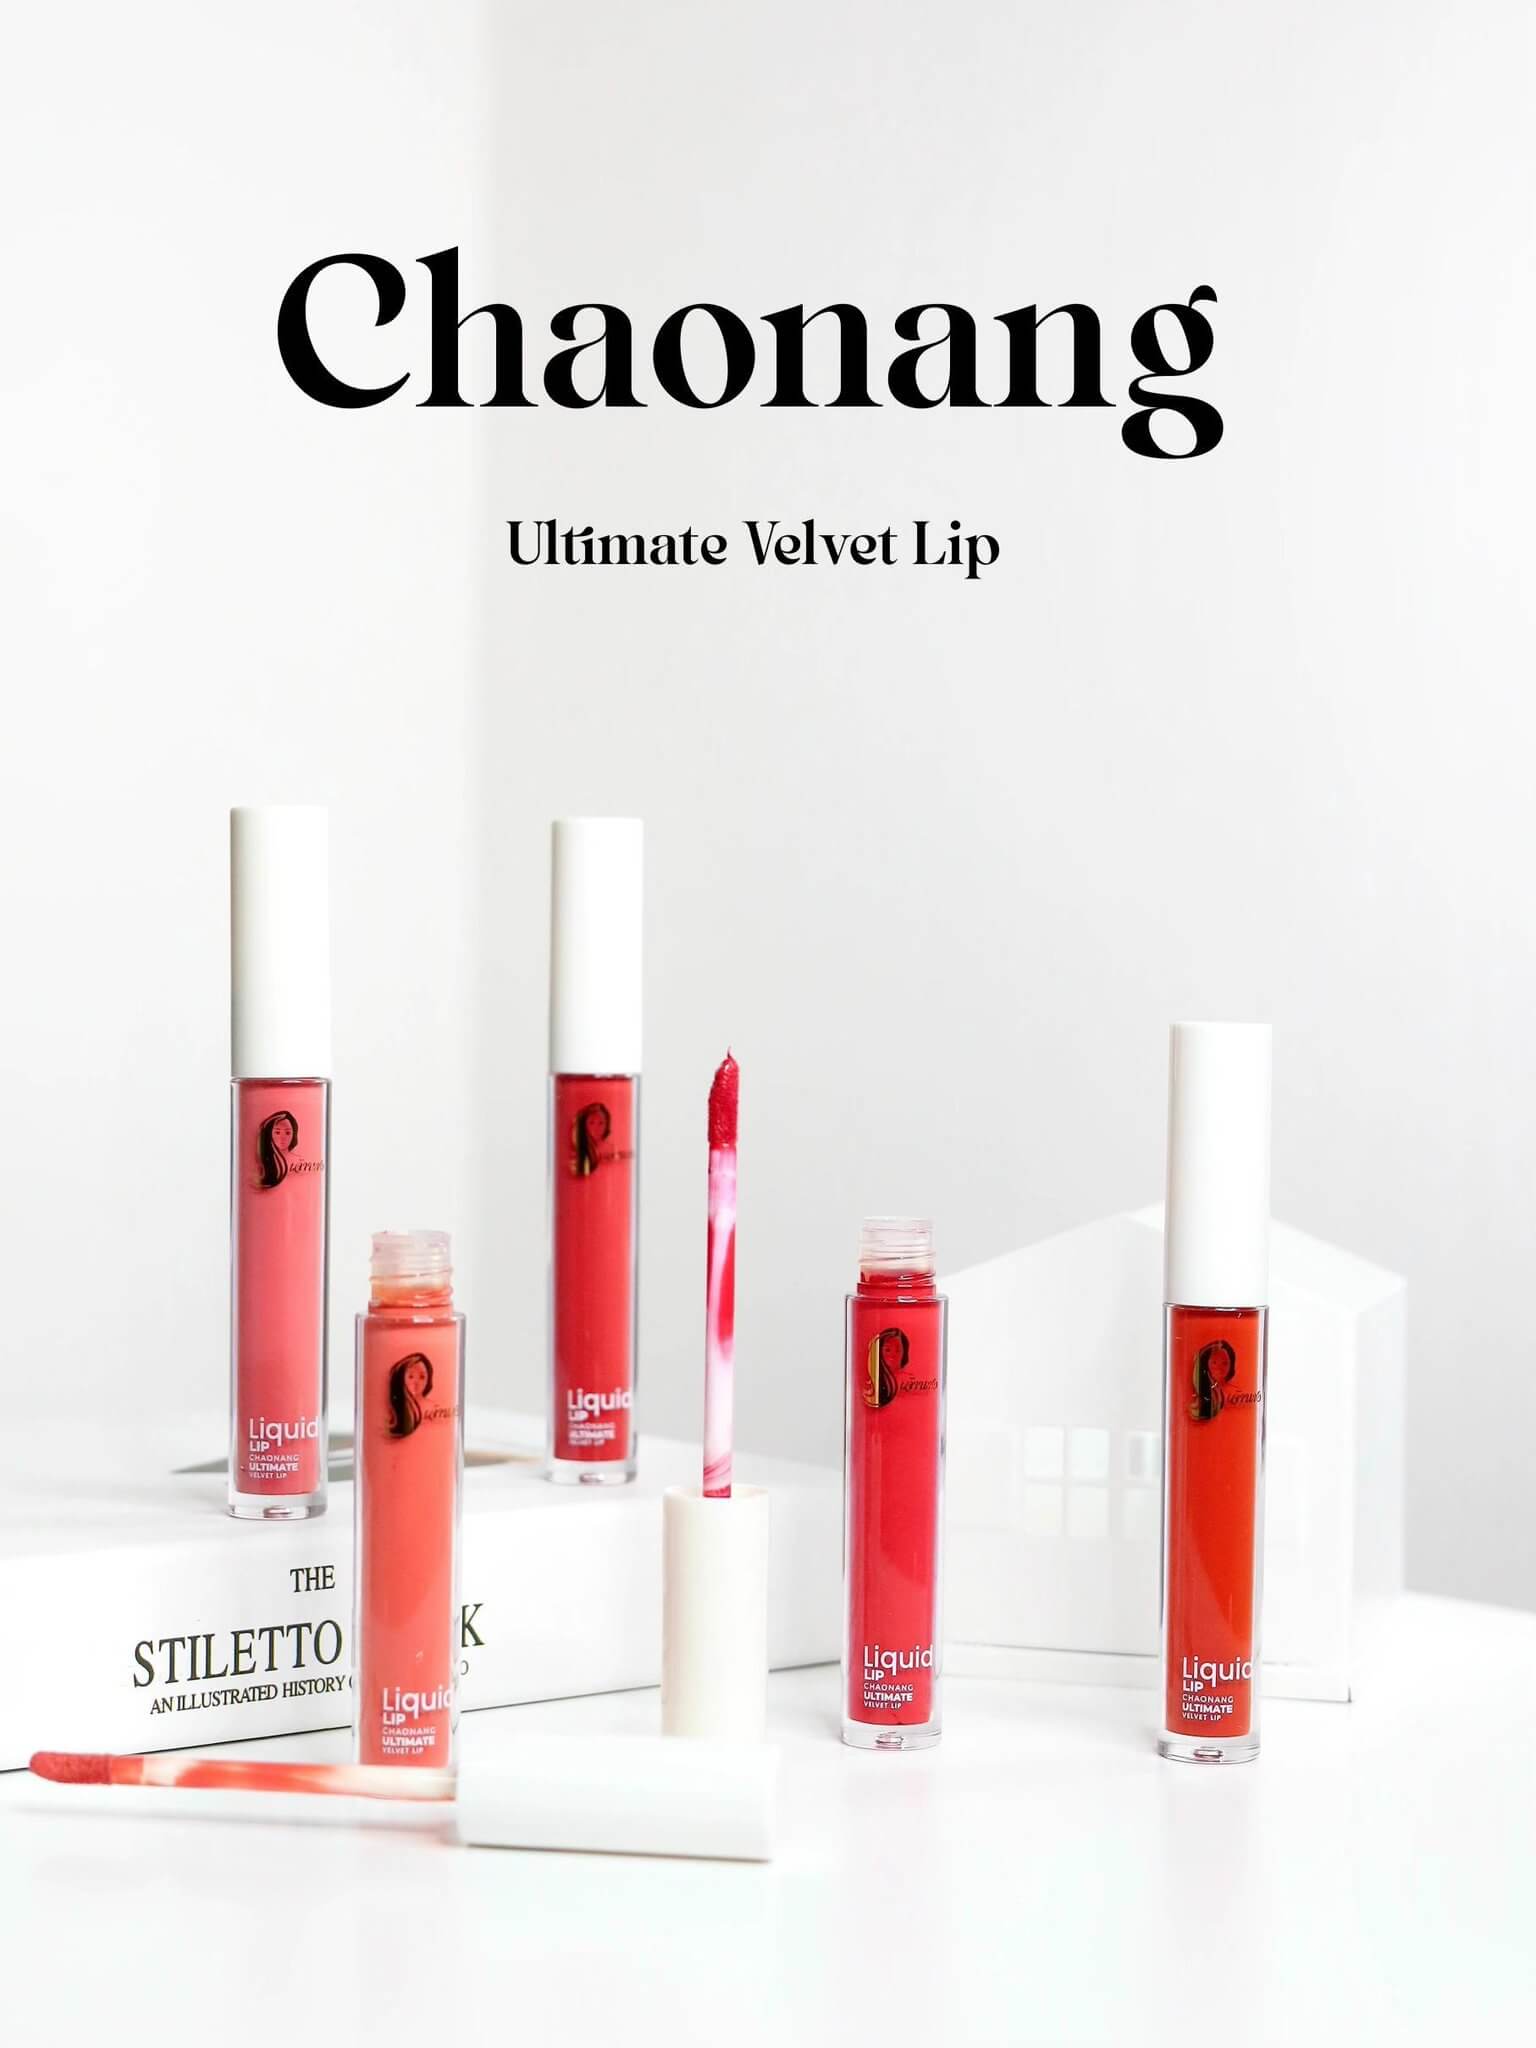 Chaonang,Ultimate Velvet Lip,Chaonang Ultimate Velvet Lip , ลิปสติกเนื้อกำมะหยี่, ลิปสติกเนื้อแมท, ลิปสติก,ลิปเจ้านาง,ลิปสติกเจ้านาง